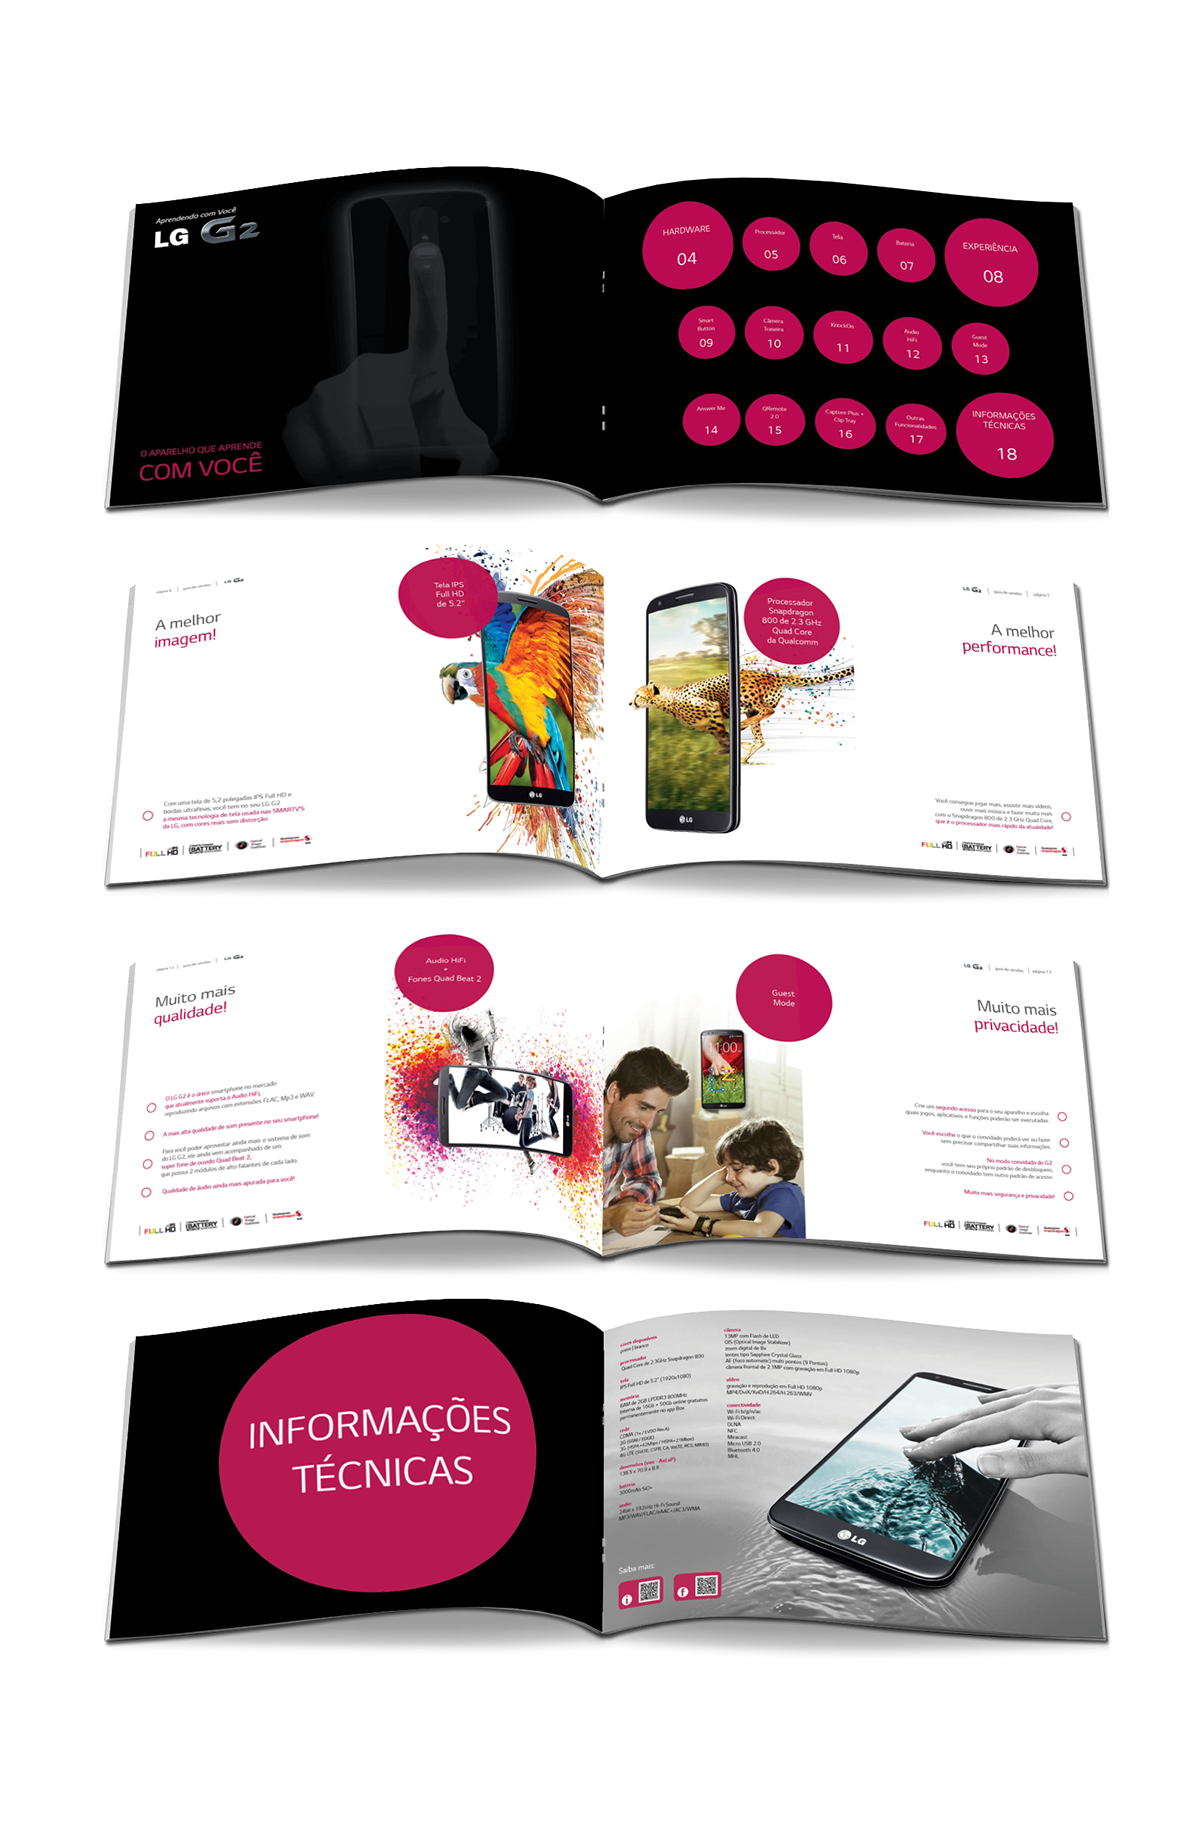 lg LG G2 smartphone RDesign training book brochure press media presentation e-learning digital media